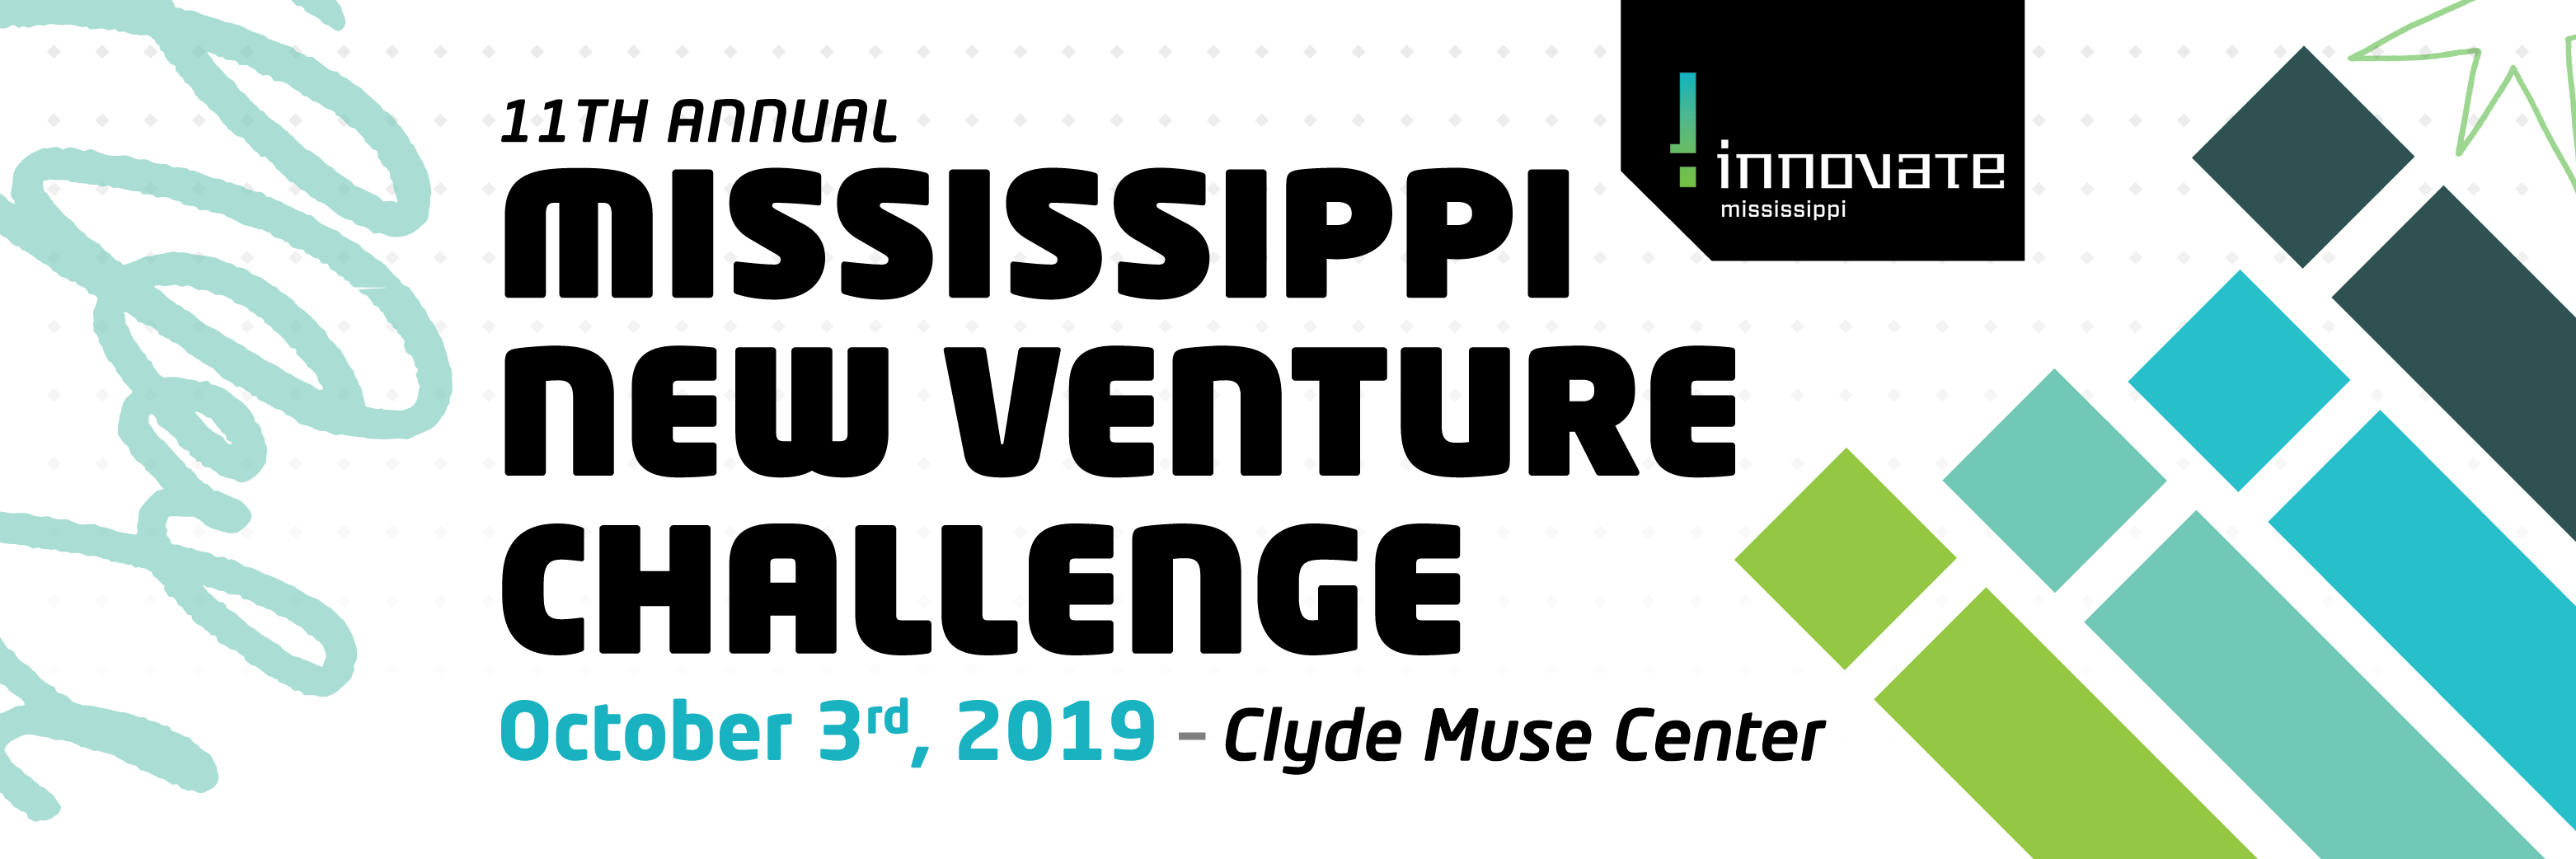 Mississippi New Venture Challenge Banner